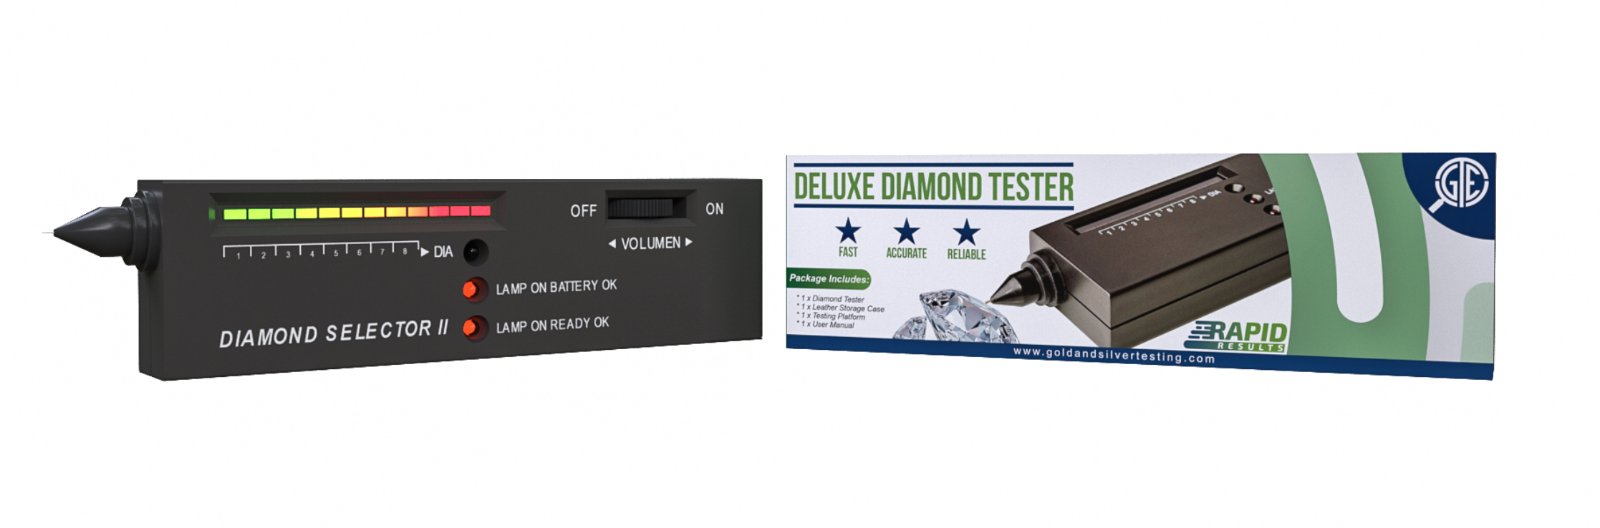 VILLCASE 3pcs Lie Detector Test Dimond Tester Diamond Tester Gem Tester  Gold Test Kit Silver Testing Kit Money Checker Pen Gadgets Gold Tester Gold